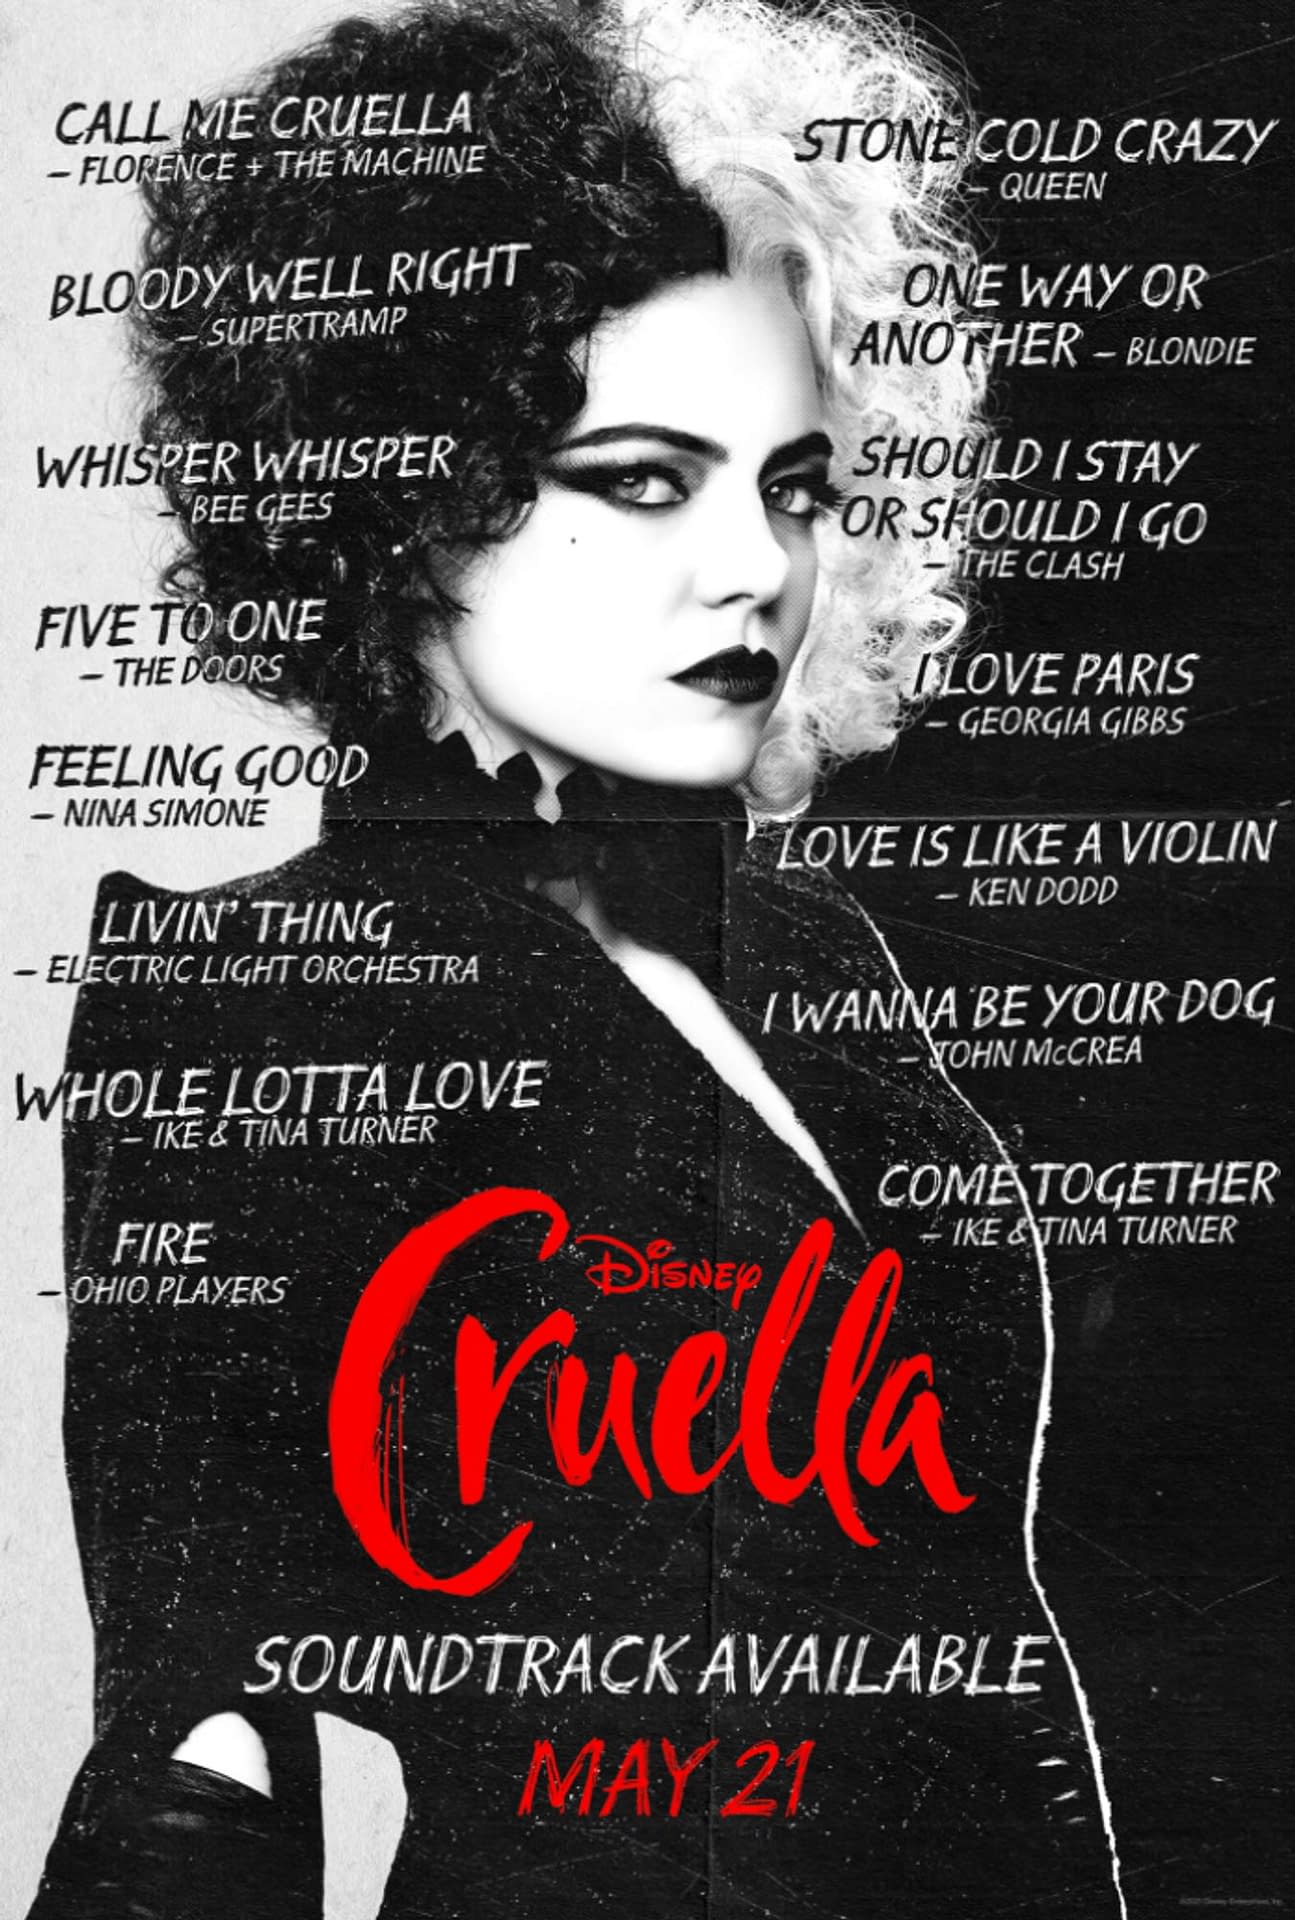 Cruella: Sneak Peek of the New Florence + The Machine Original Song